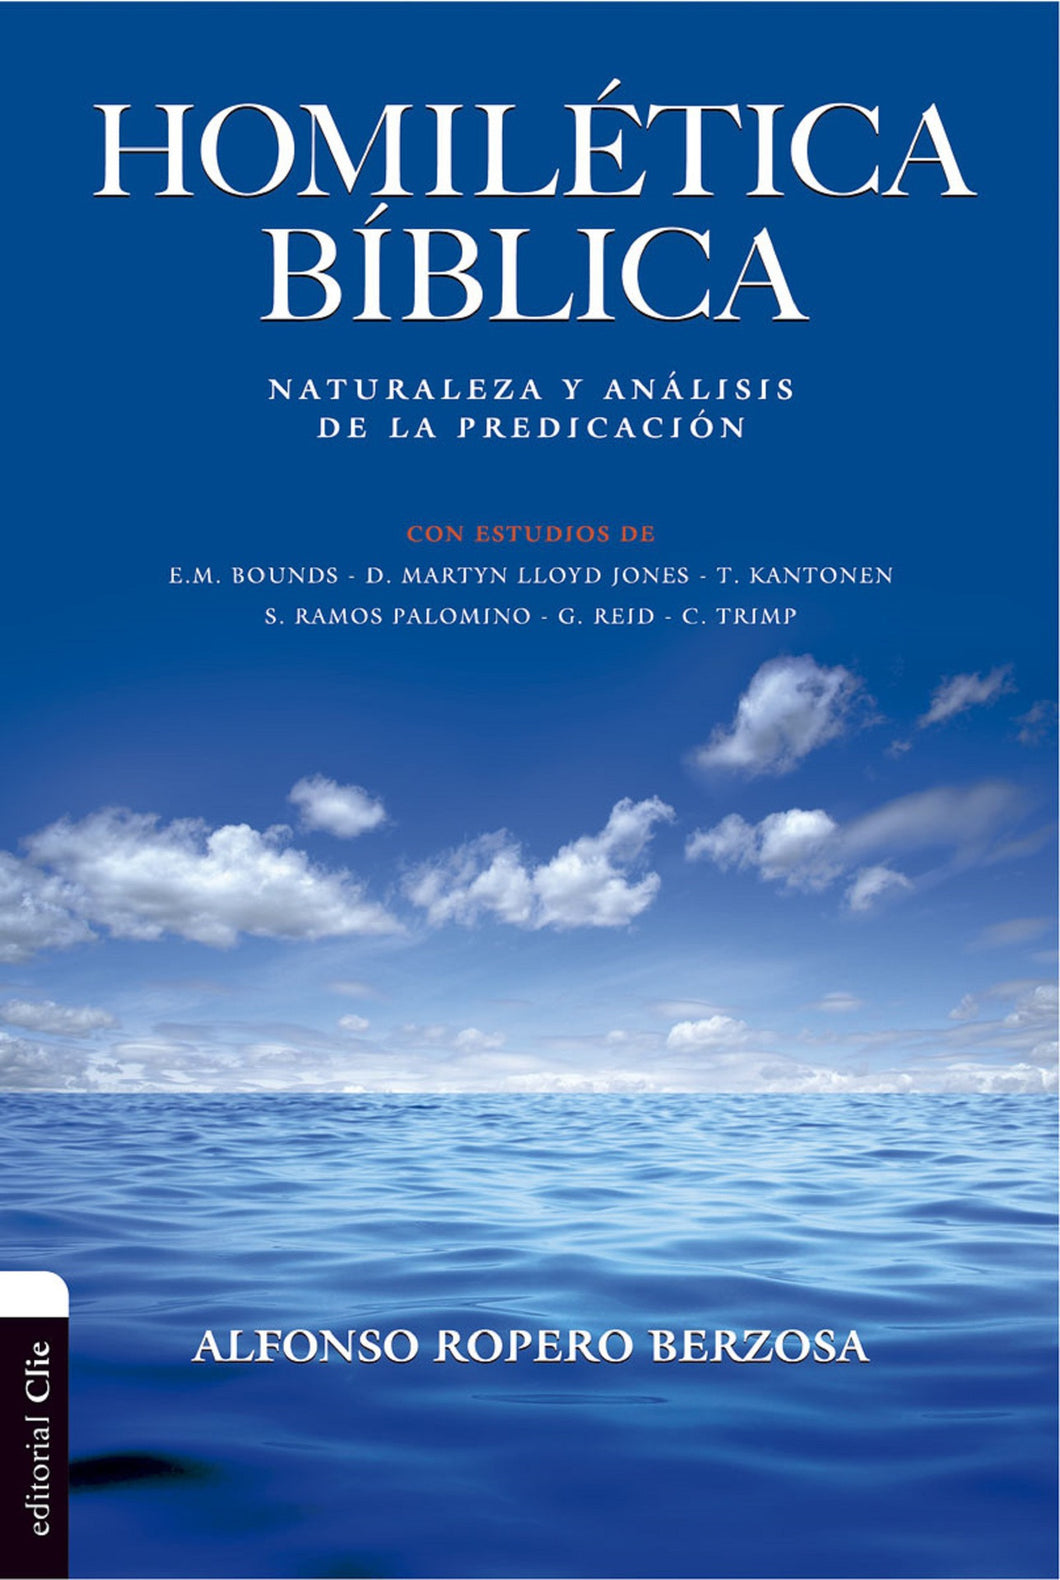 Homilética Bíblica - Alfonso Ropero